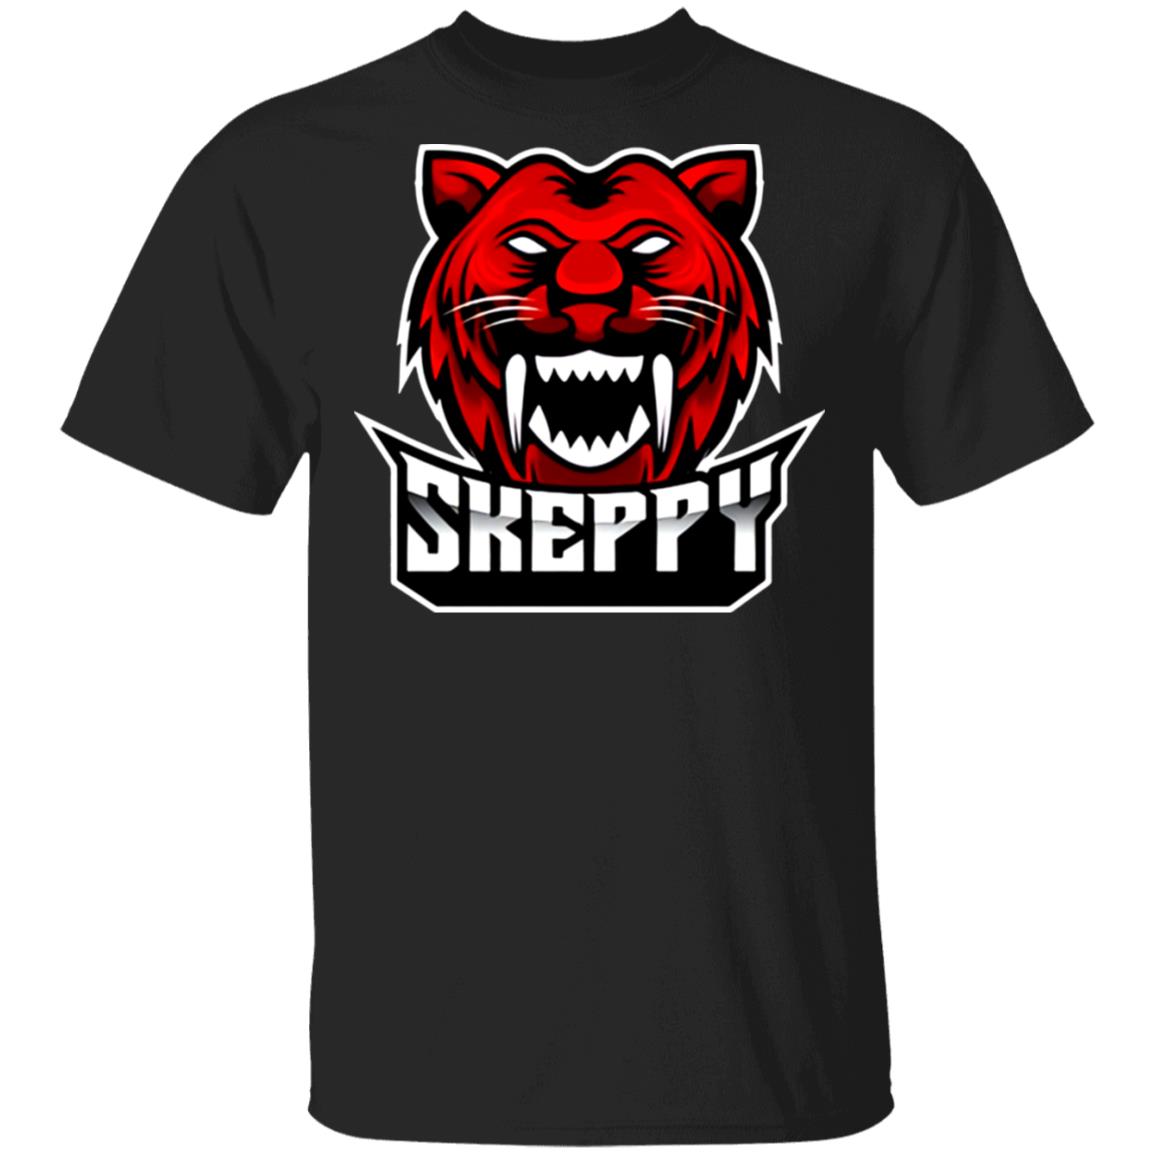 Skeppy Merch
#Skeppy #Merchandise #Hoodies #Tees #USMarket #LimitedEdition #GamingMerch #OnlineShopping #Apparel #FanFavorites #ExclusiveDesigns #Streetwear

tipatee.com/product/skeppy…